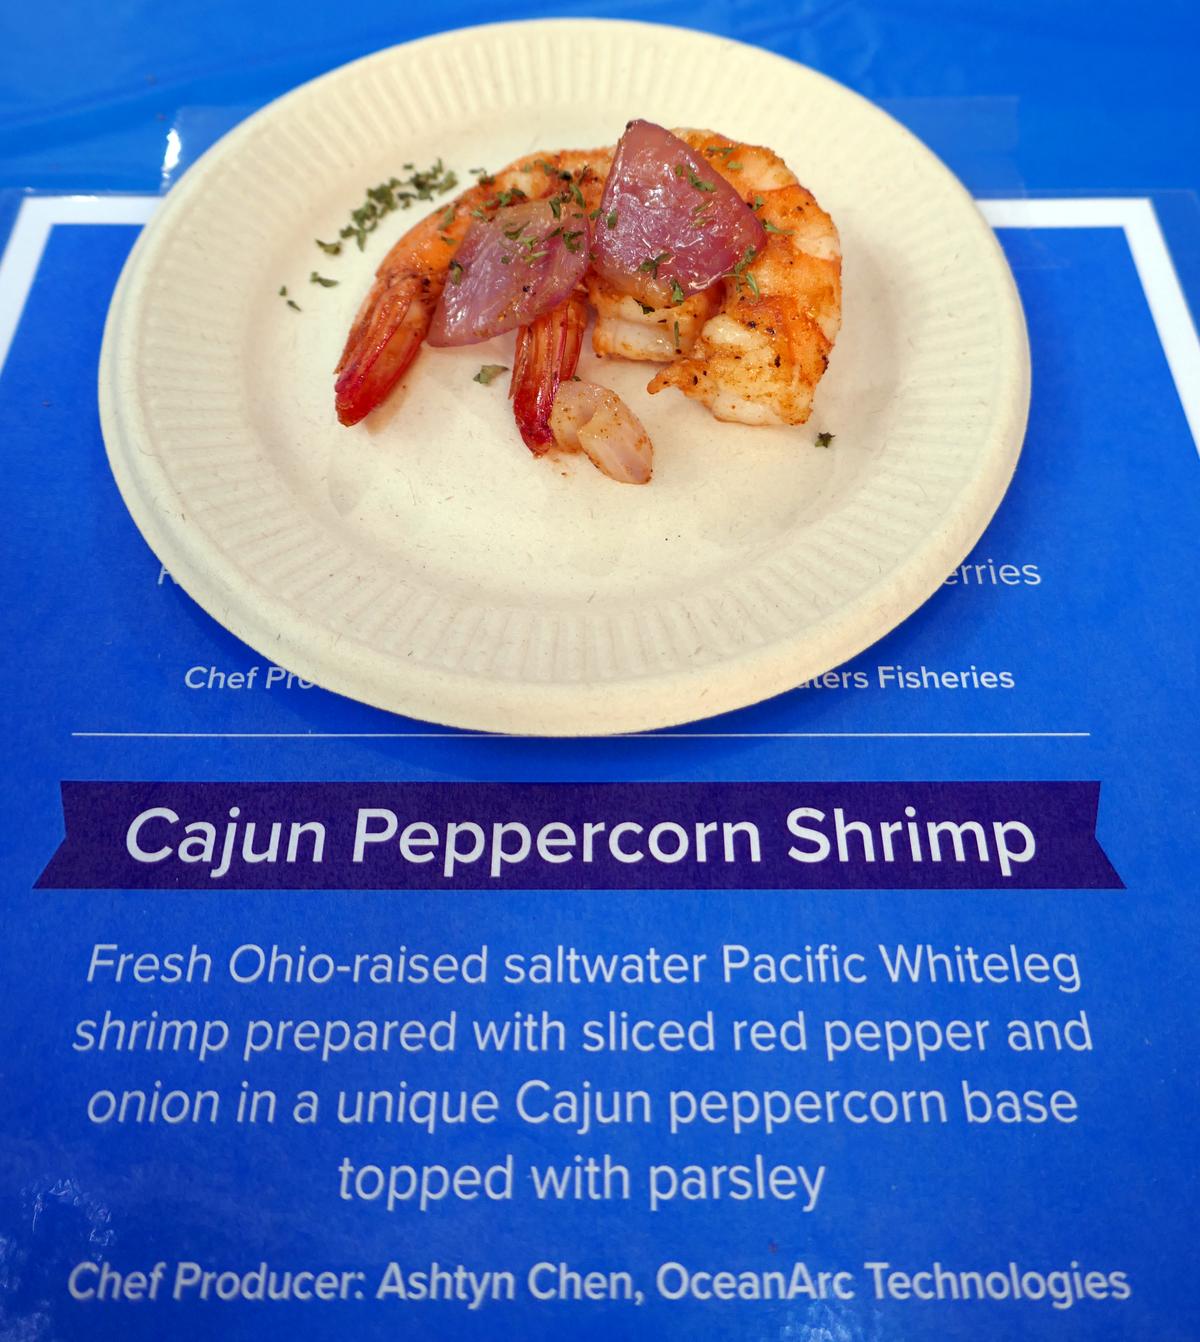 Cajun peppercorn shrimp on a paper plate.